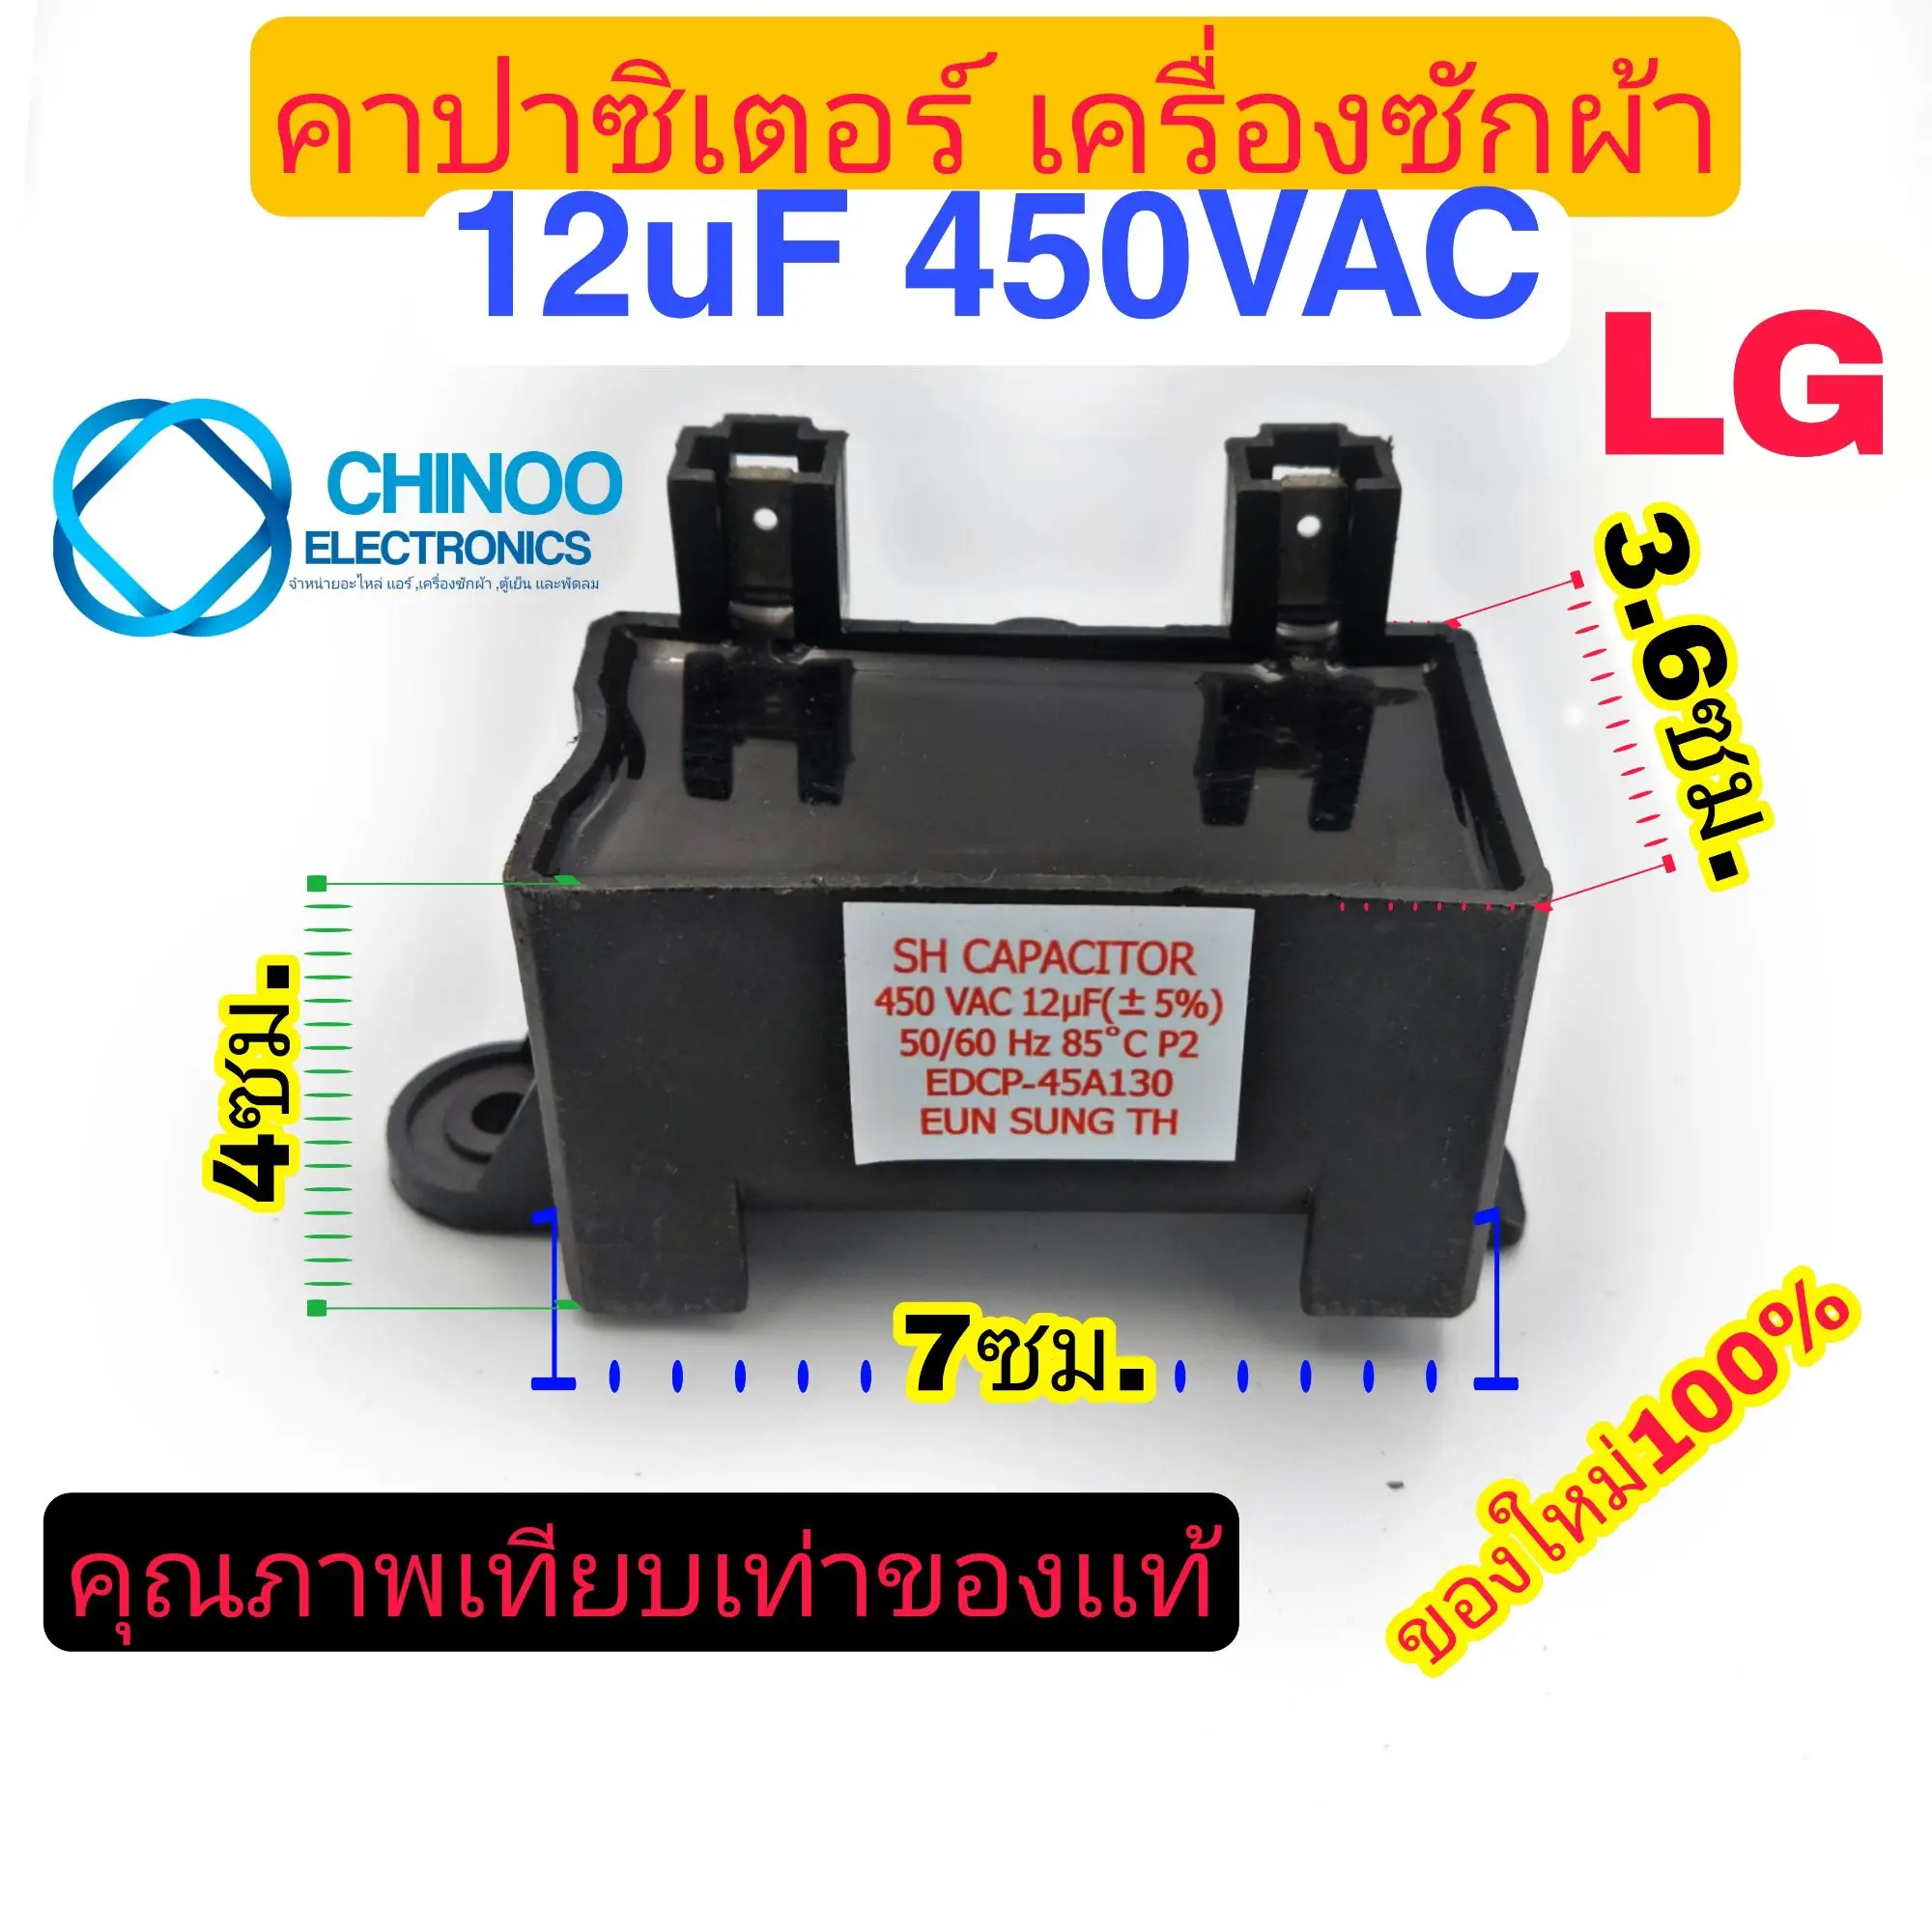 (LG สีดำ) คาปาซิเตอร์ 12uF 450VAC คาปา 12MF 450V เเคปรั่น CHINOO ELECTRONICS